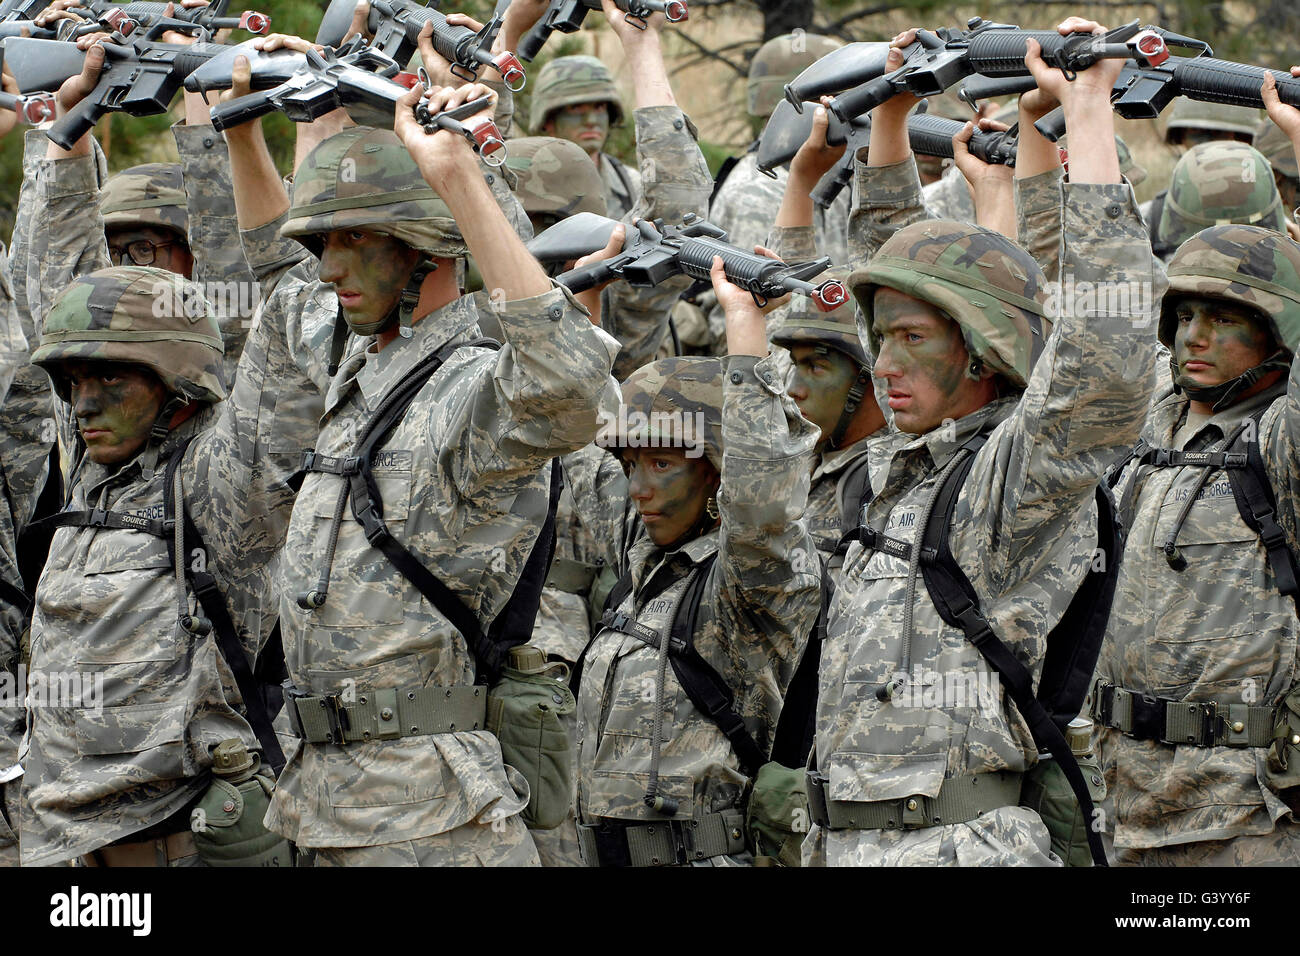 Cadets prepare to participate in Operation Warrior. Stock Photo